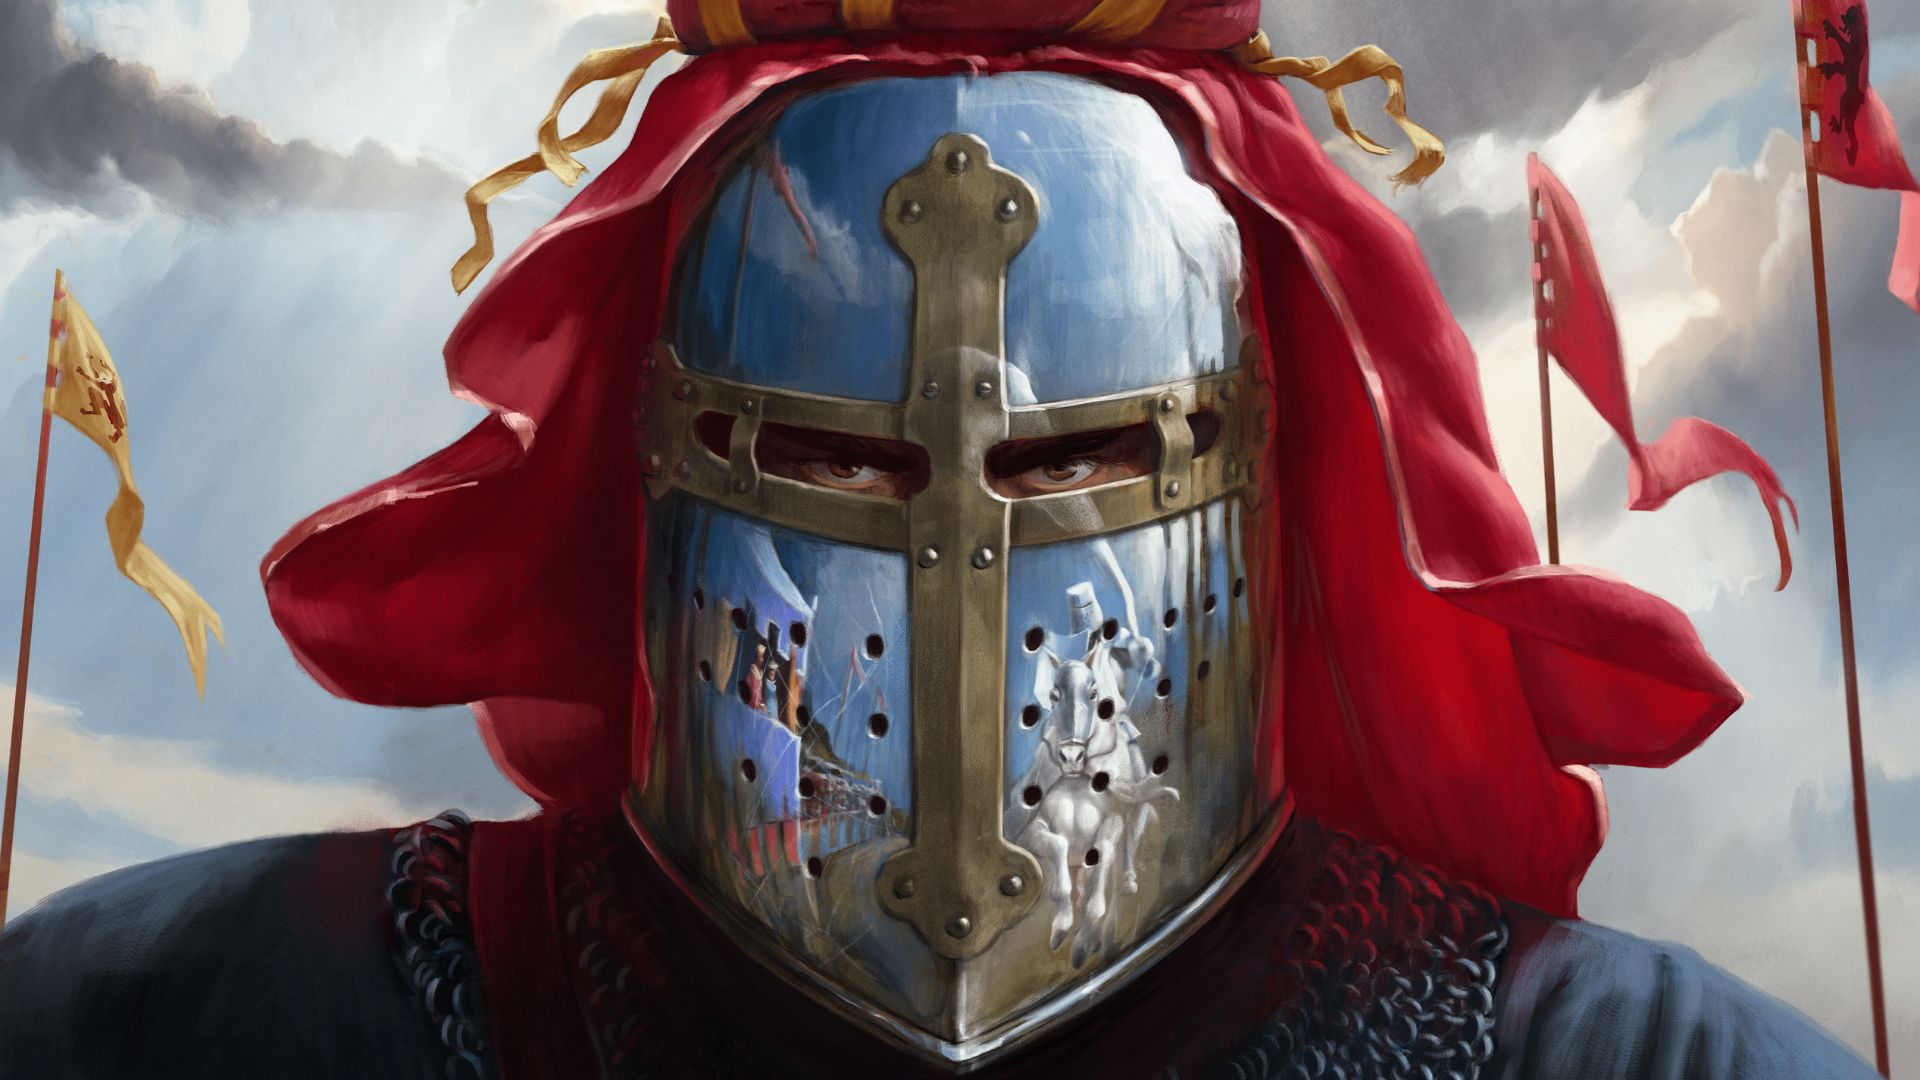 Crusader Kings III General Discussions :: Steam Community